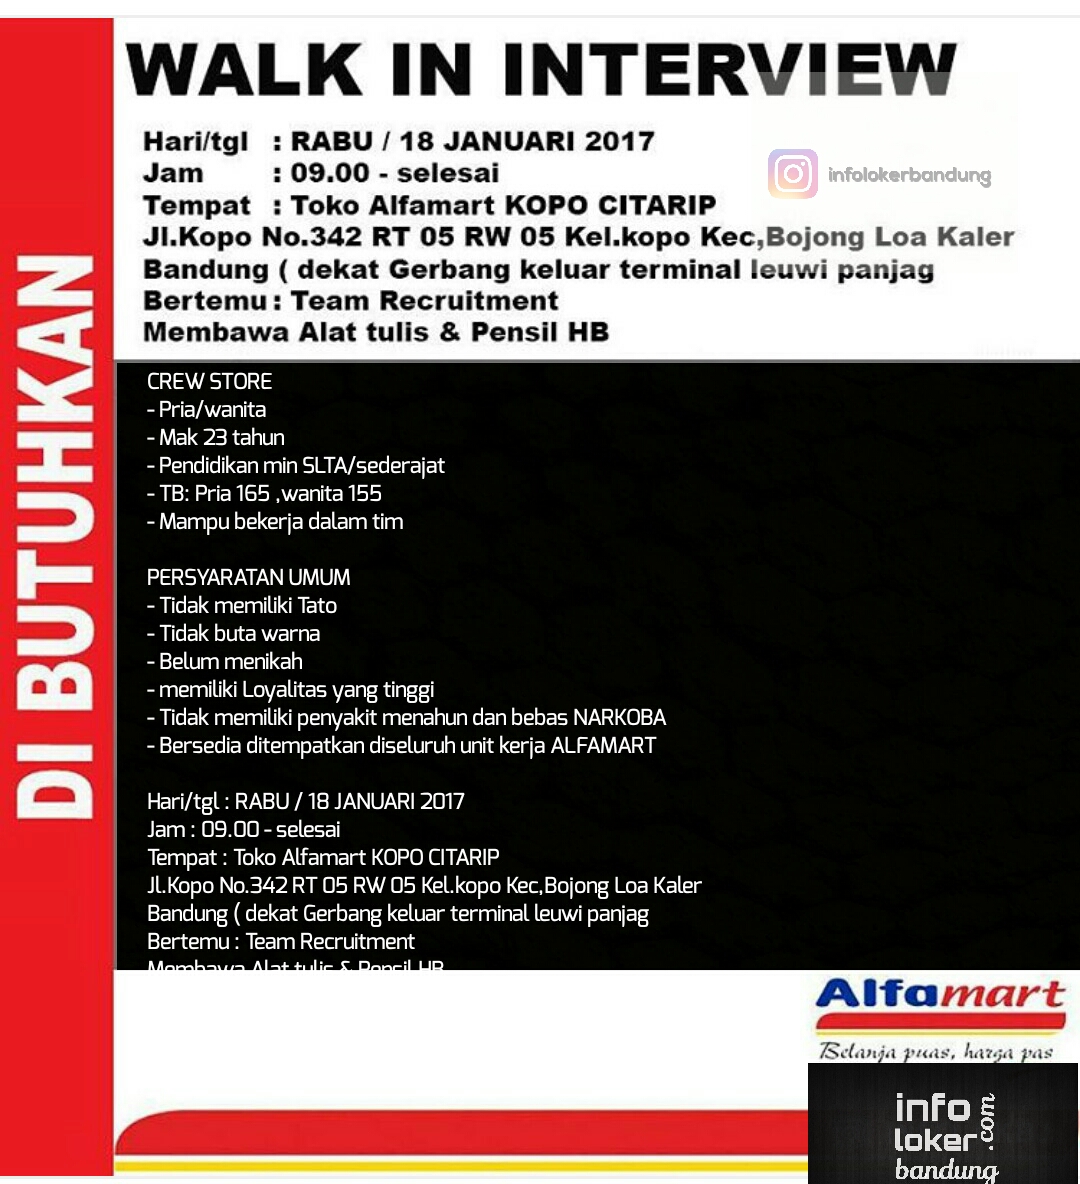 Info Lowongan Alfamart - Loker Spot